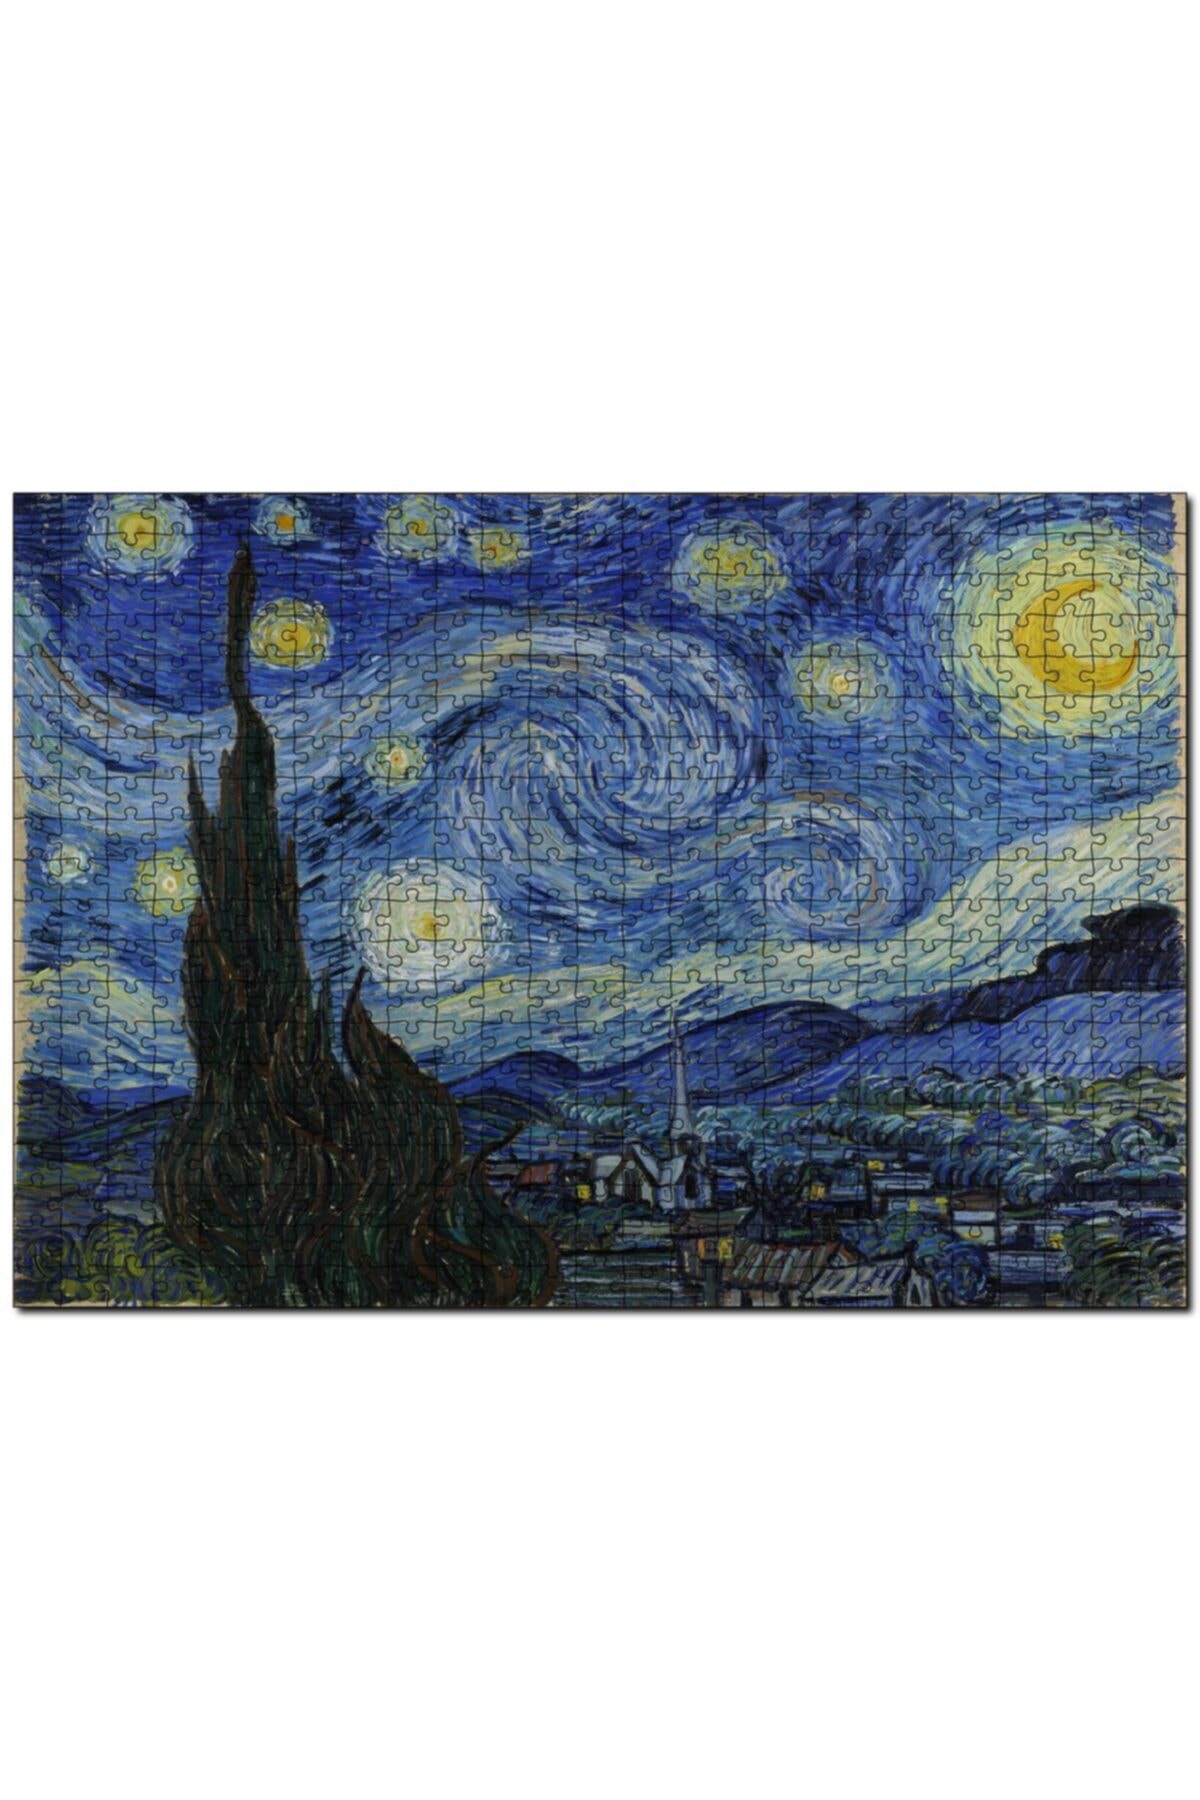 Cakapuzzle Vincent Van Gogh Deliliğin Kıyılarında 1000 Parça Puzzle Yapboz Mdf(ahşap)